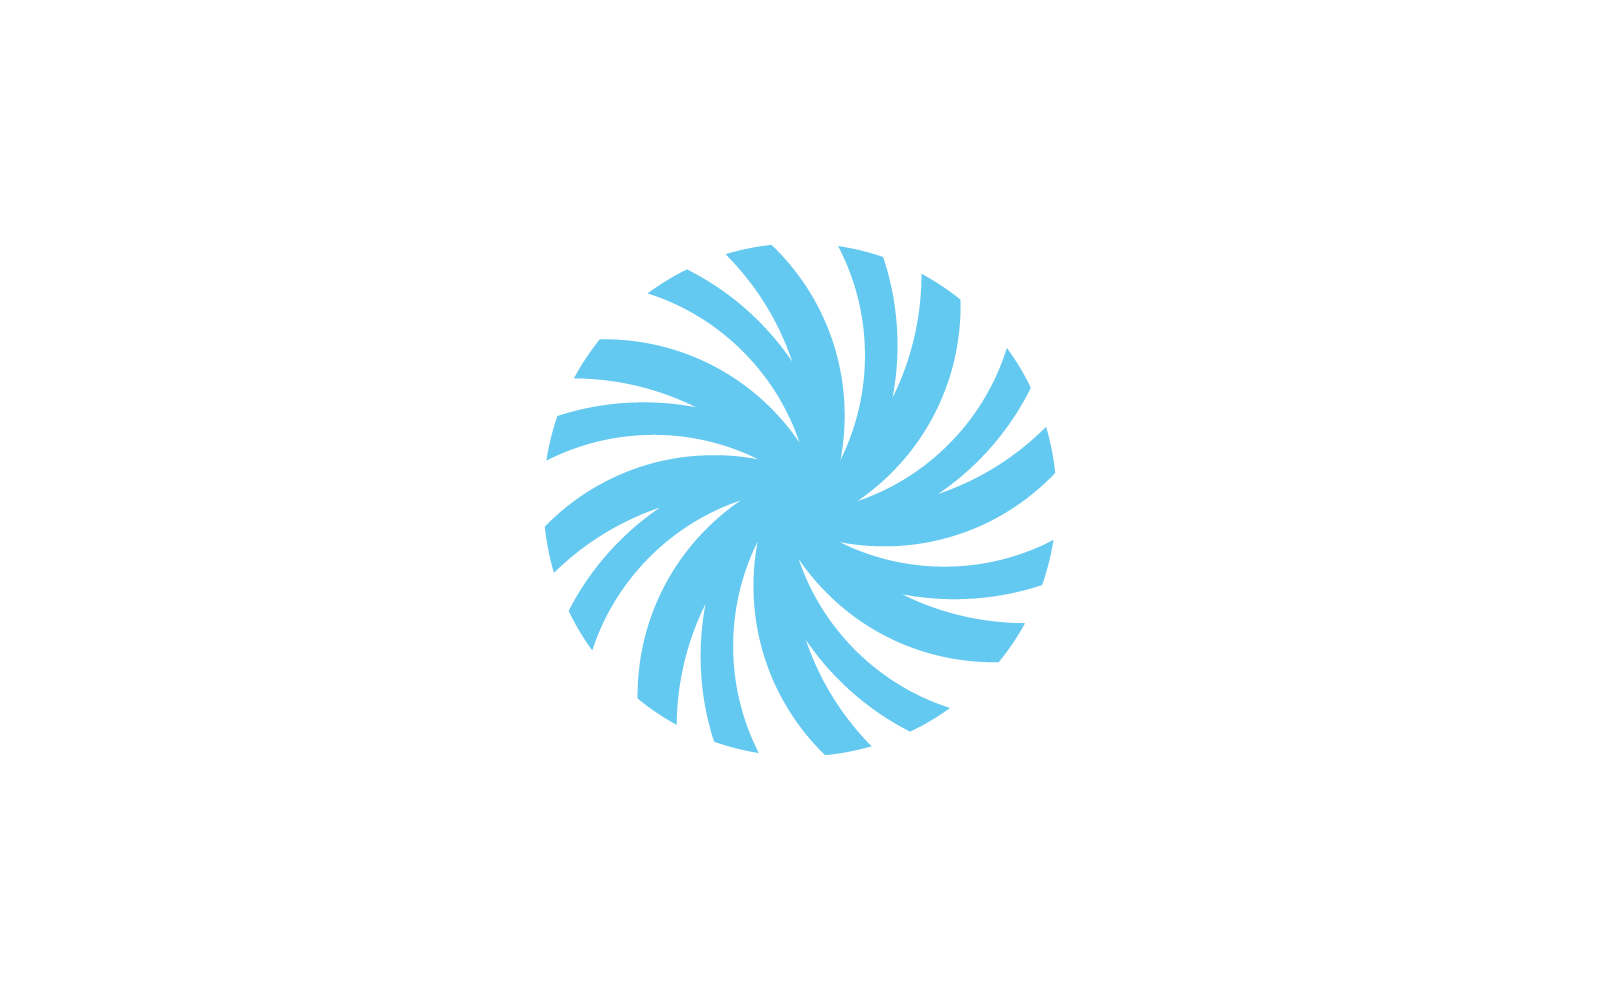 Business logo, vortex, wave and spiral flat design Logo Template